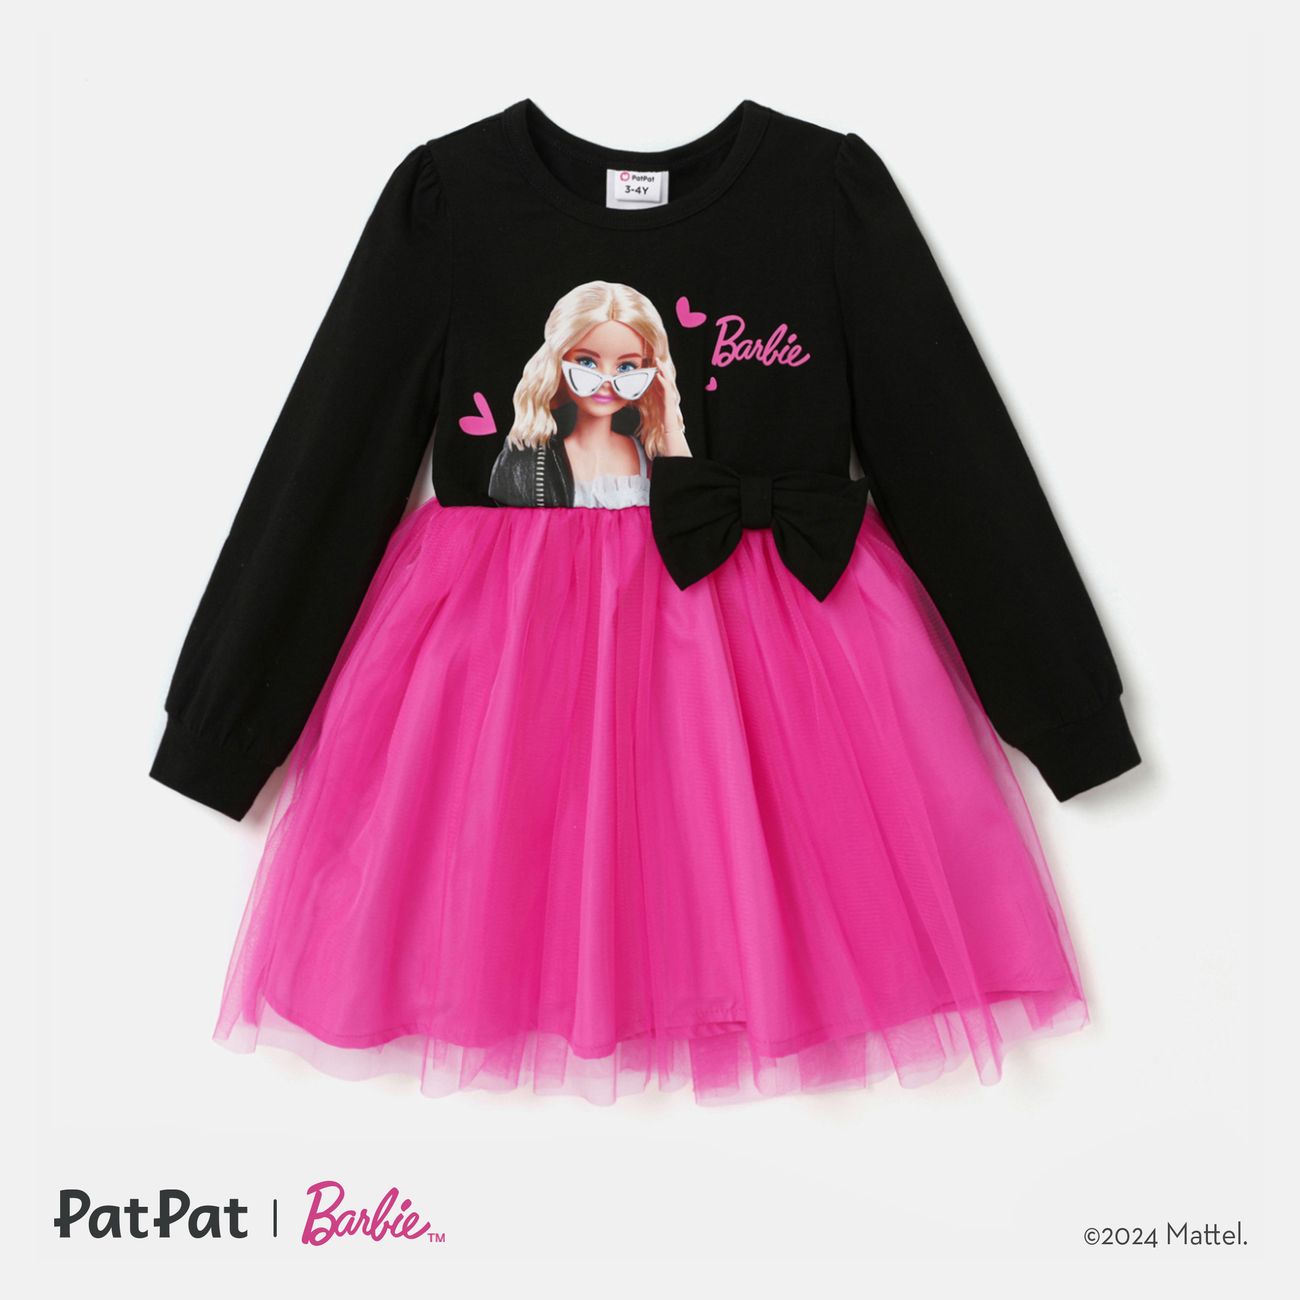 Robe Barbie garçon/fille Officiel: Achetez En ligne en Promo